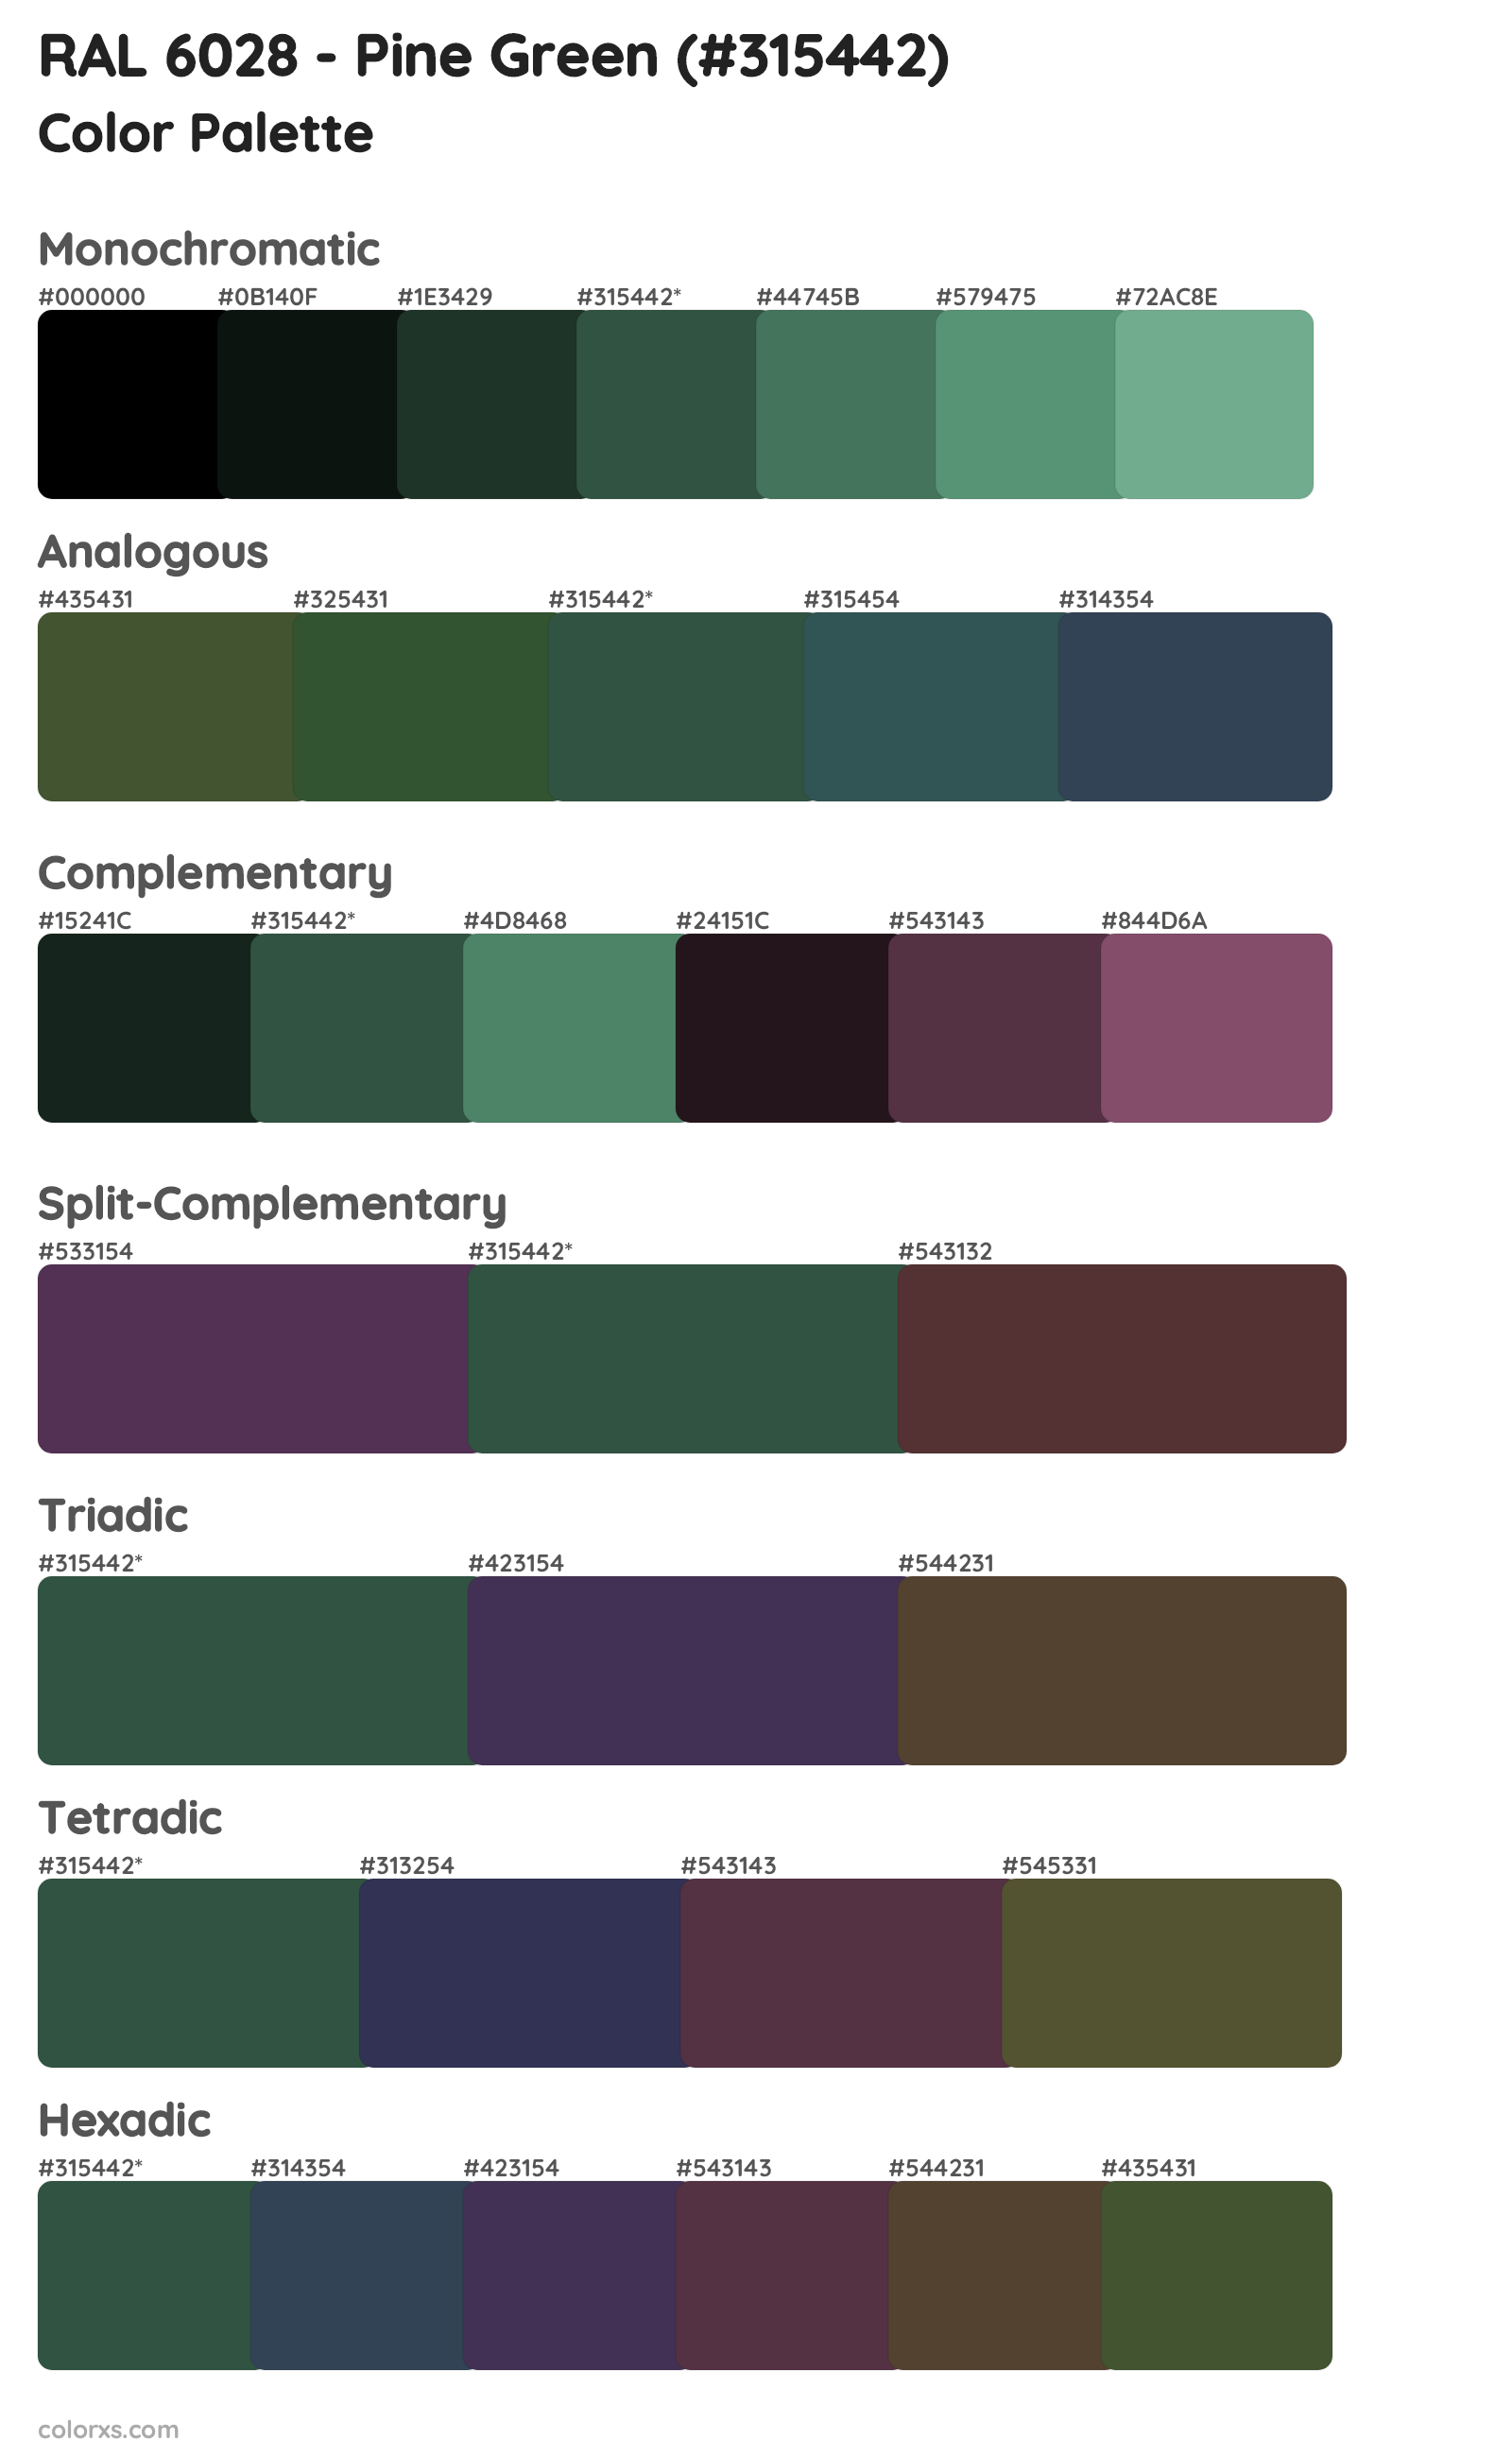 RAL 6028 - Pine Green Color Scheme Palettes